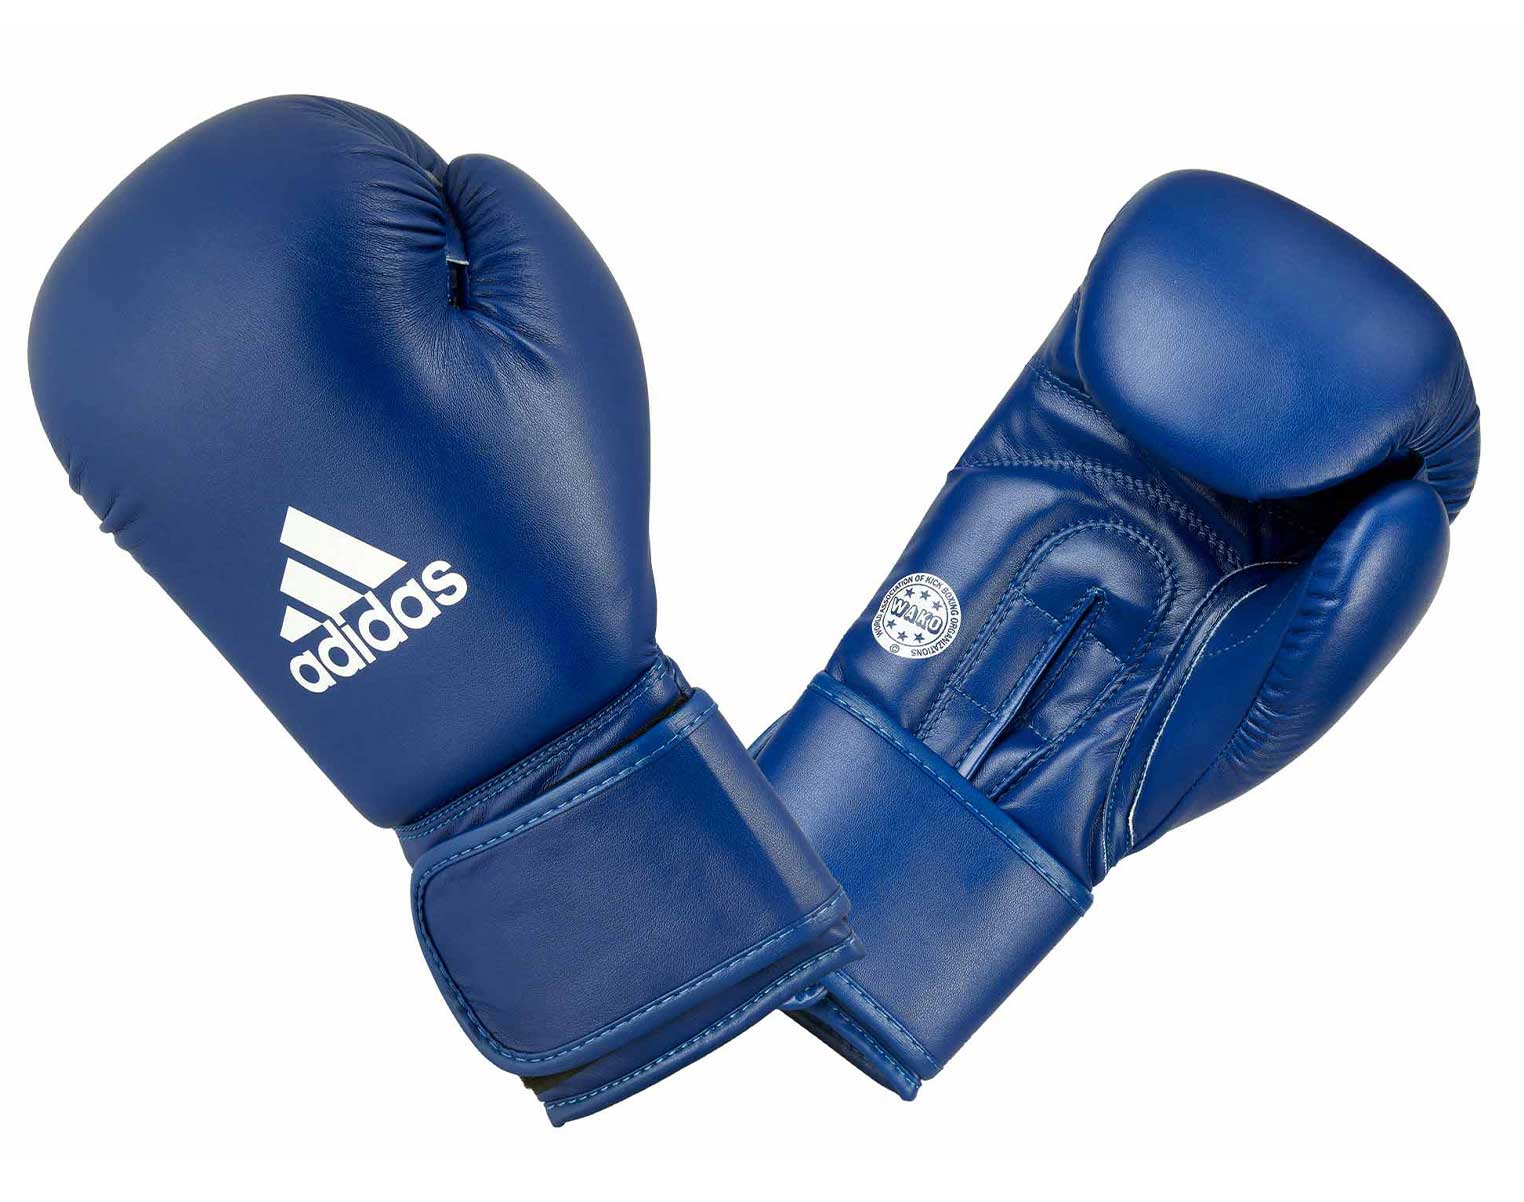 Adidas WAKO Kickboxing Training Glove 10oz